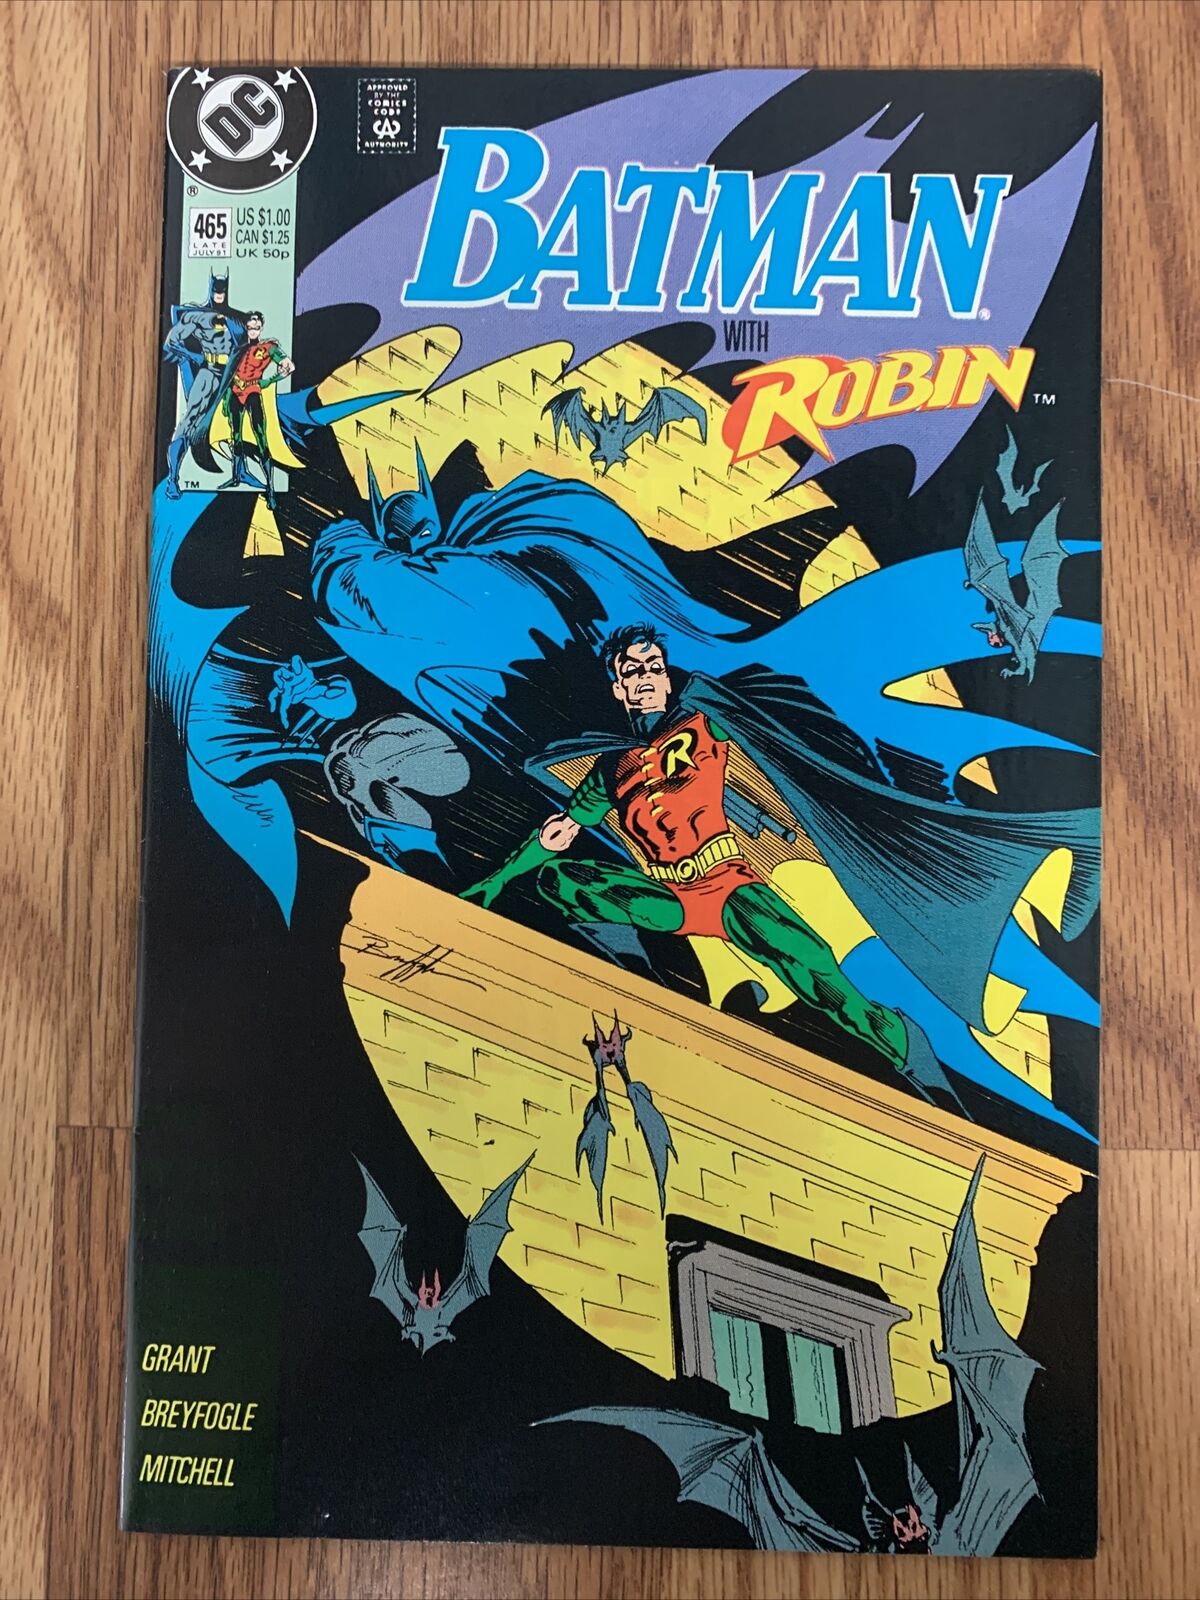 Batman #465 - Copper Age - Norm Breyfogle art - early Tim Drake Robin appearance